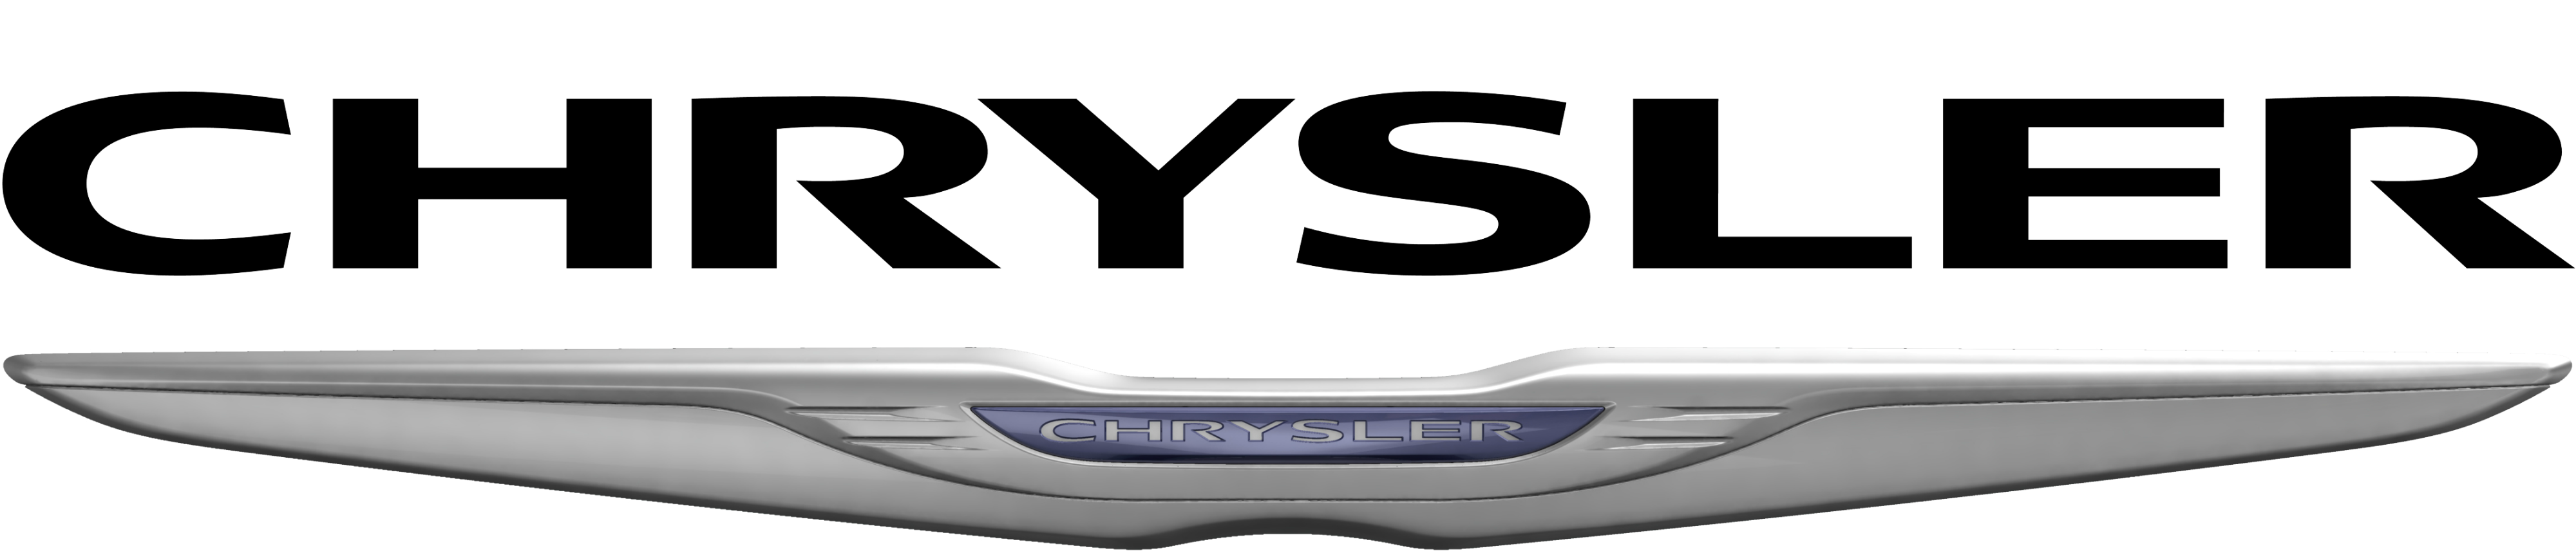 Chrysler Logo, Chrysler Car Symbol Meaning And History | Car Brand ...